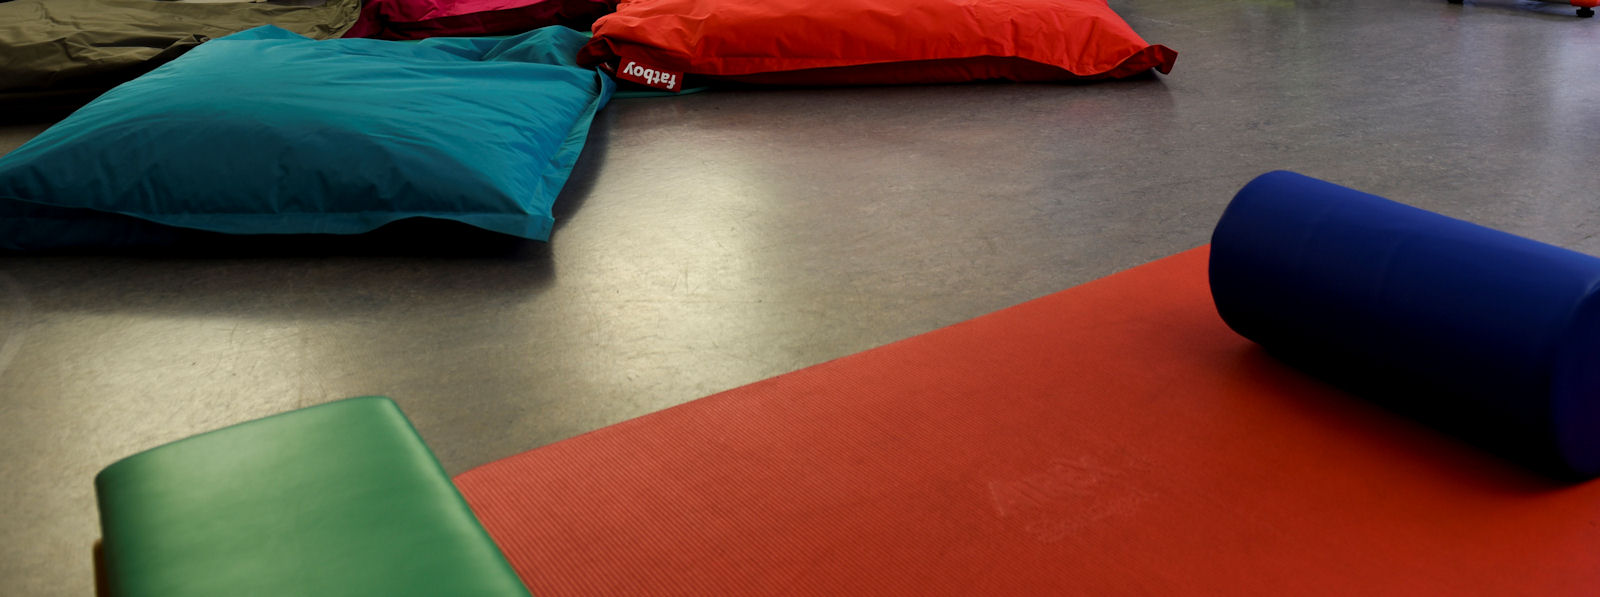 Large floor cushions on a polished gym floor